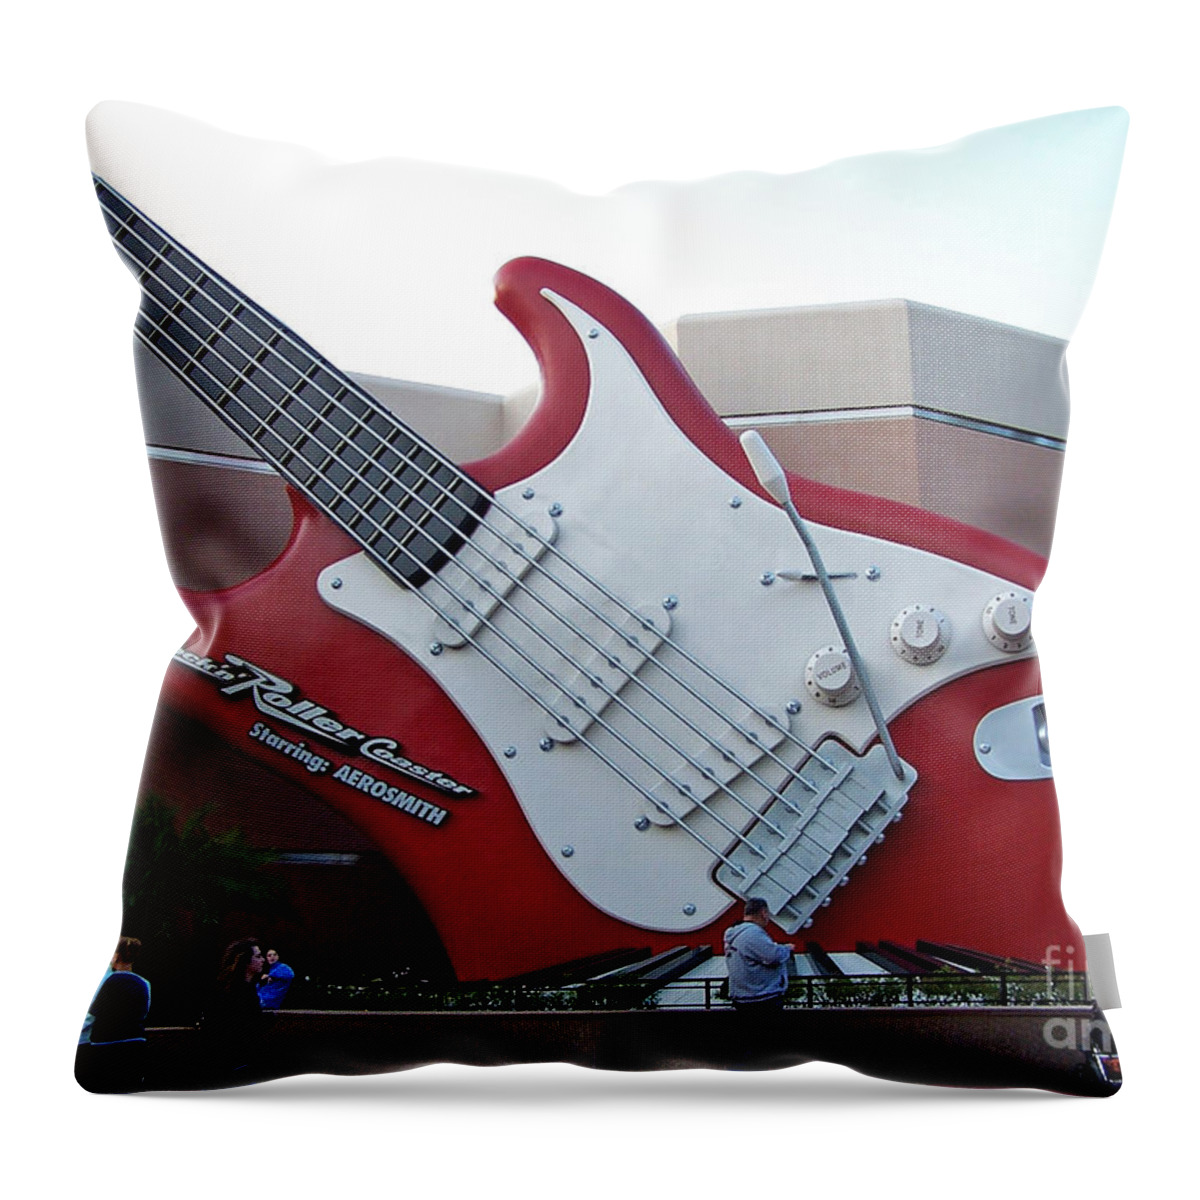 Aerosmith Throw Pillow featuring the photograph Disney Guitar by Tom Doud